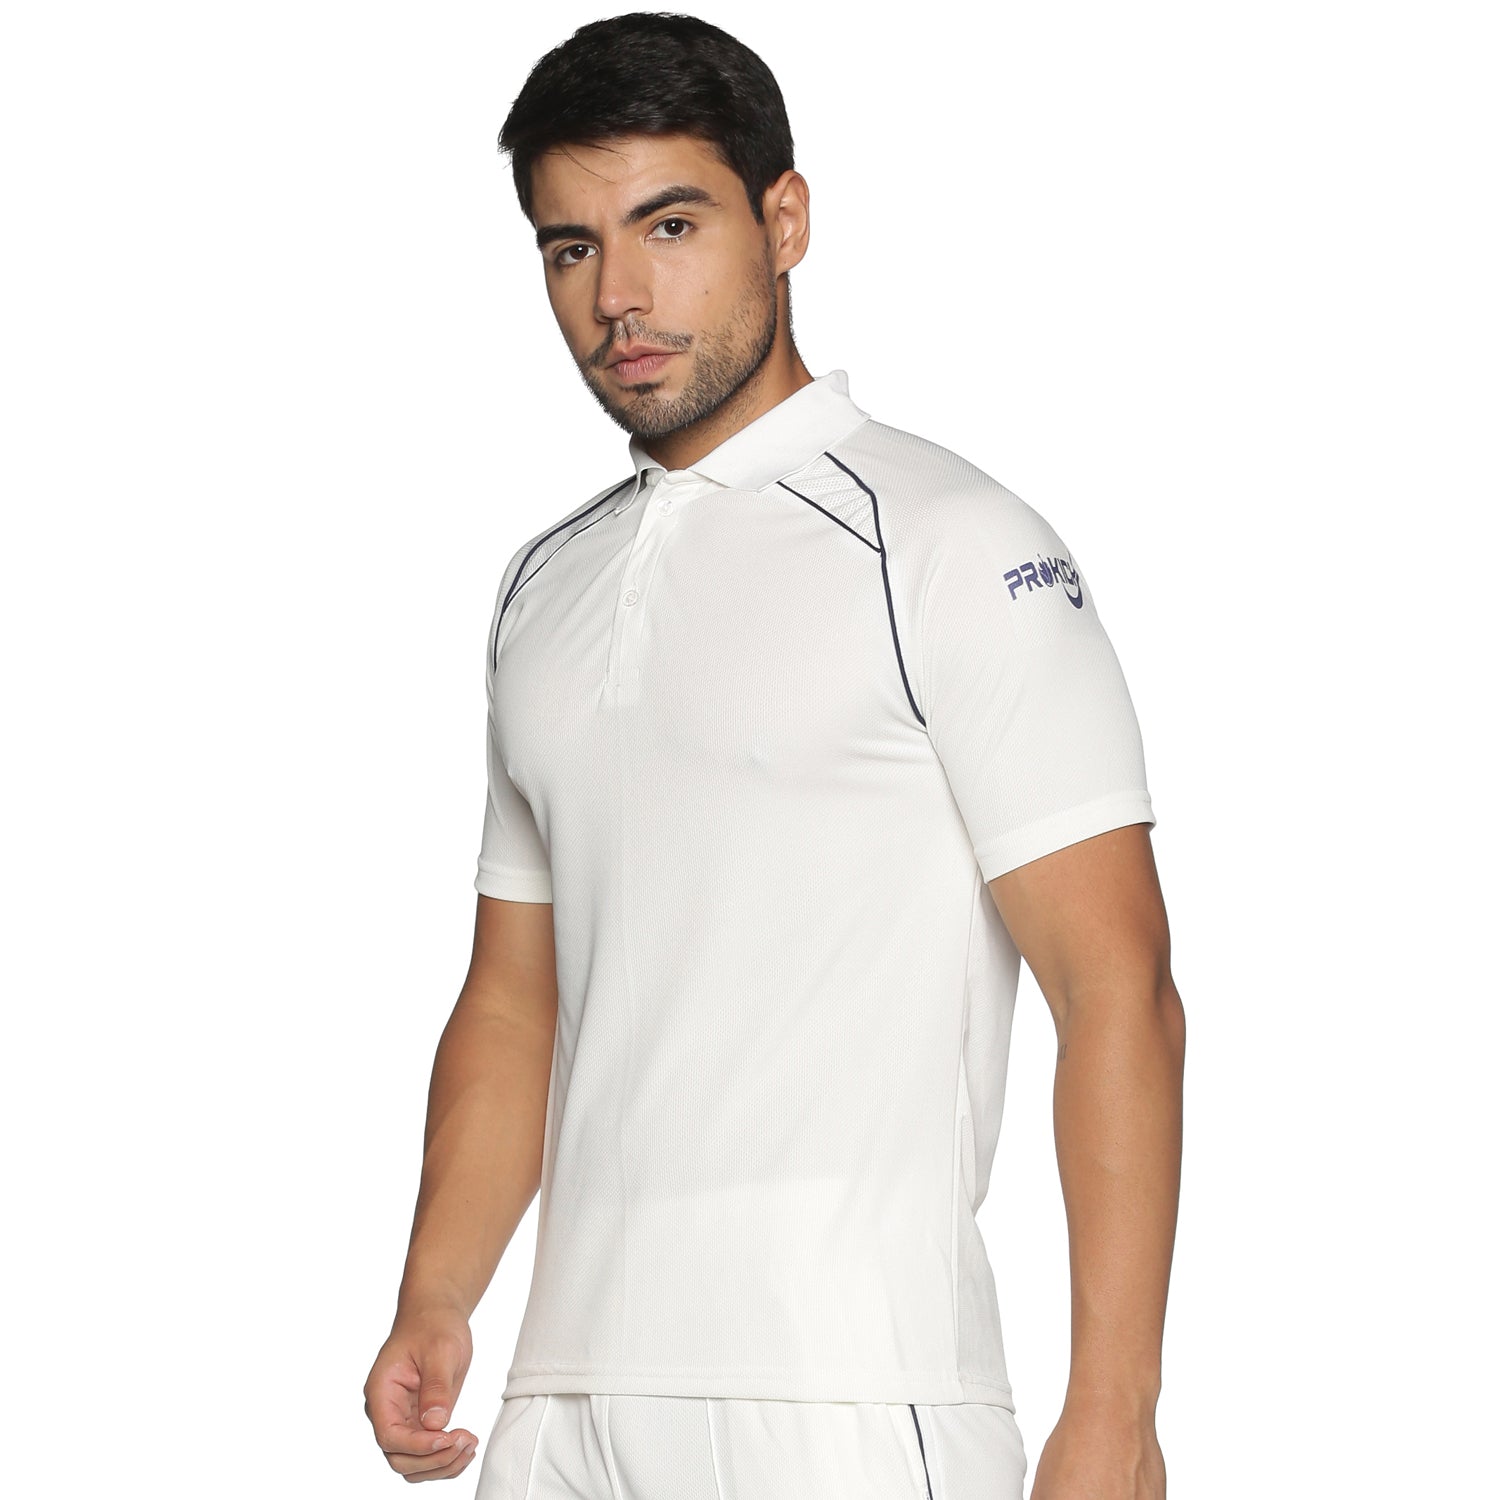 Prokick Cricket White Half Sleeve T-Shirt - Best Price online Prokicksports.com